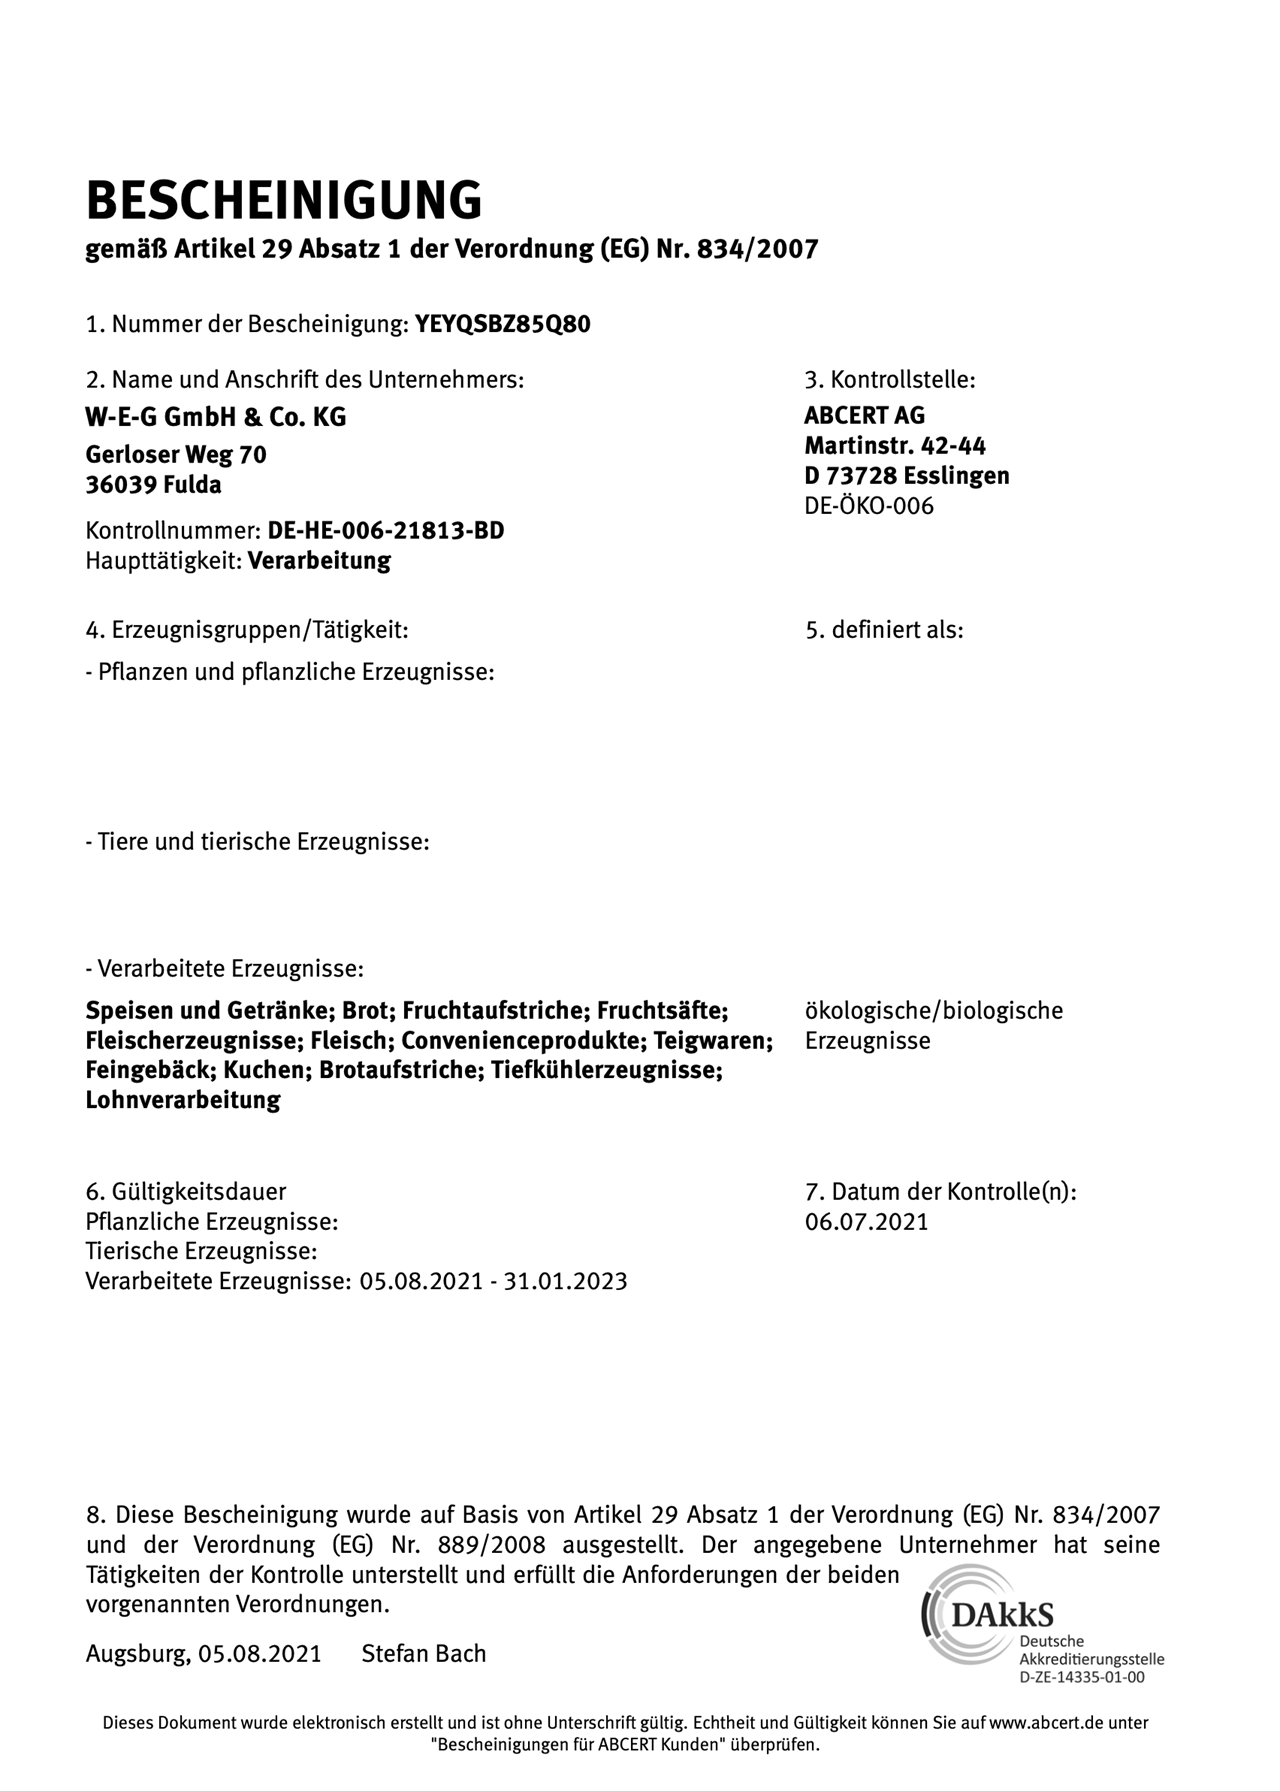 LindenGut - das Bio-Gästehaus Evidence certificates Organic certificate ABCERT